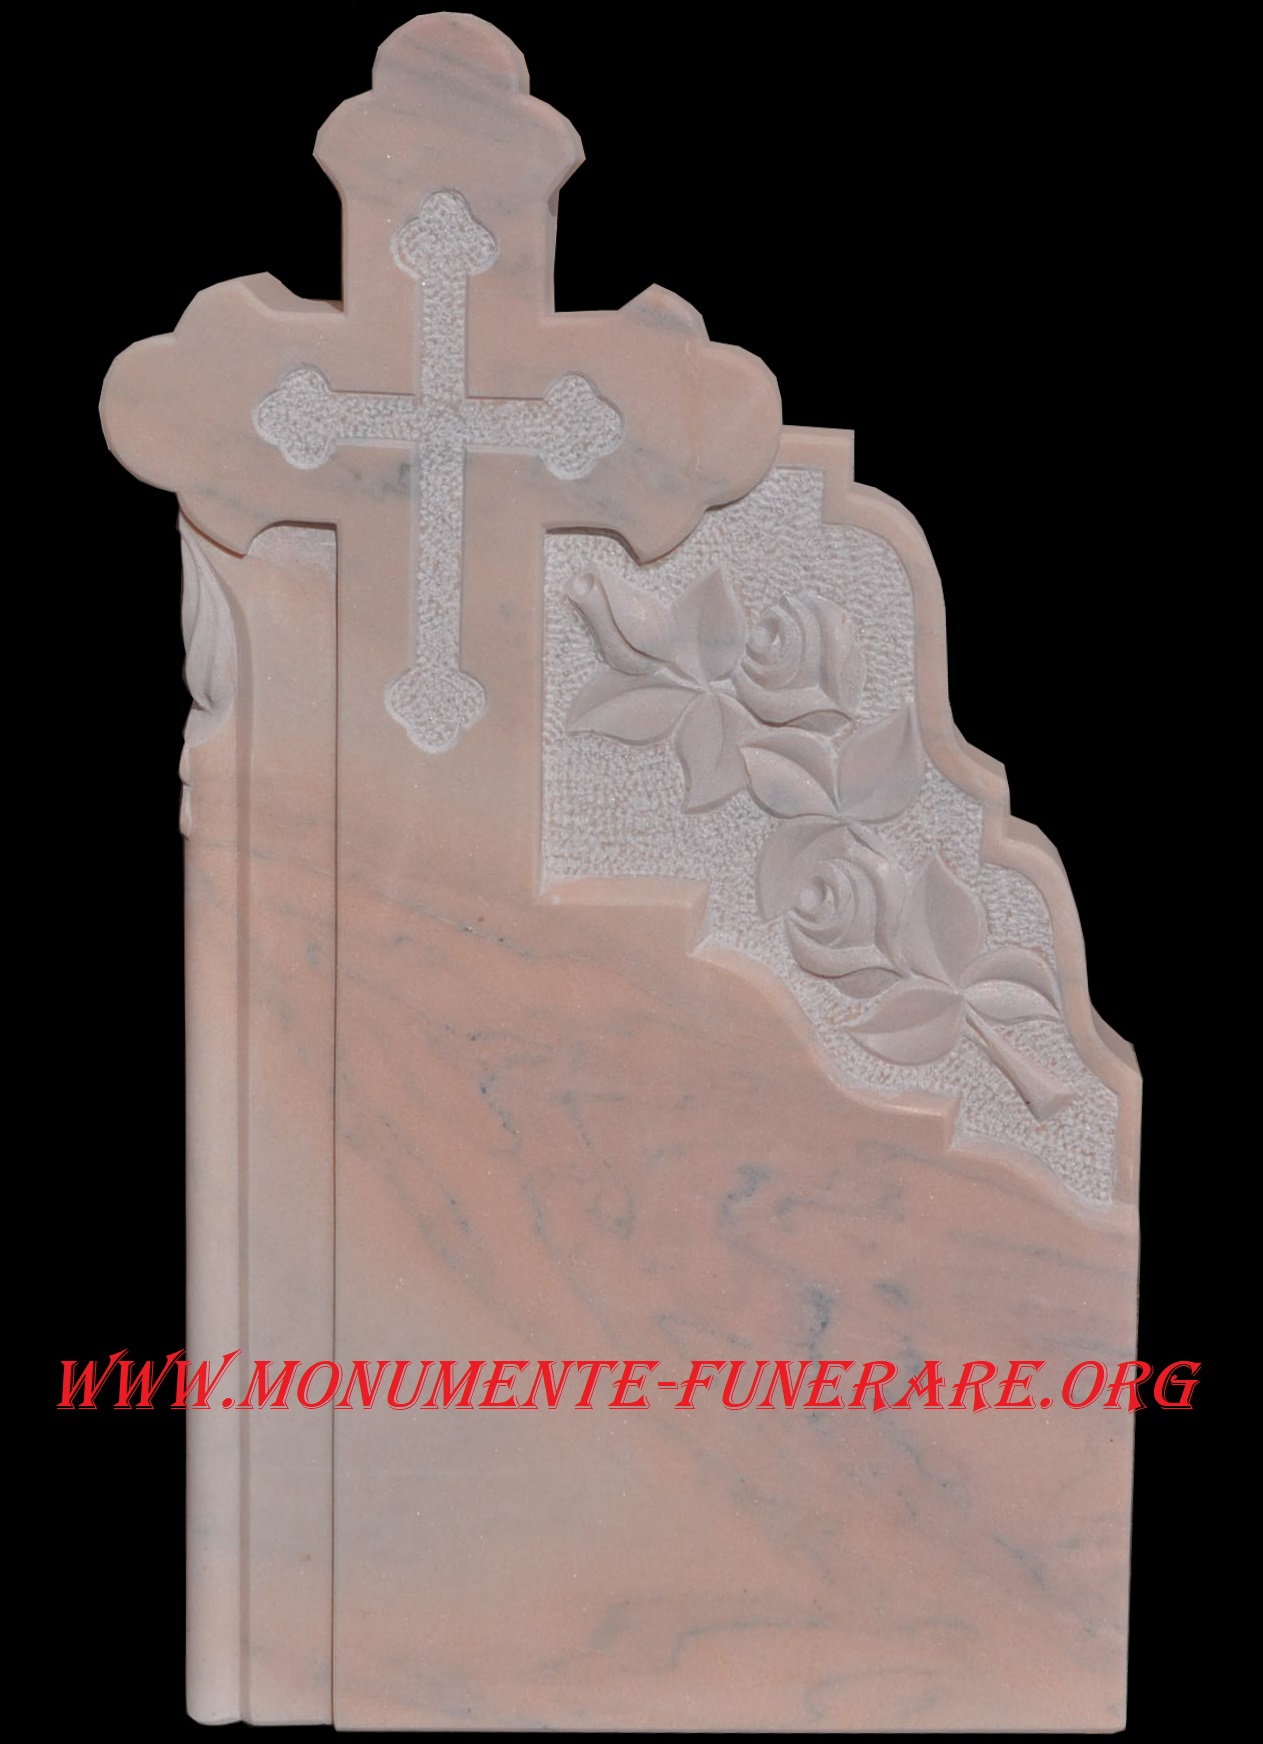 monument funerar model stylaz9